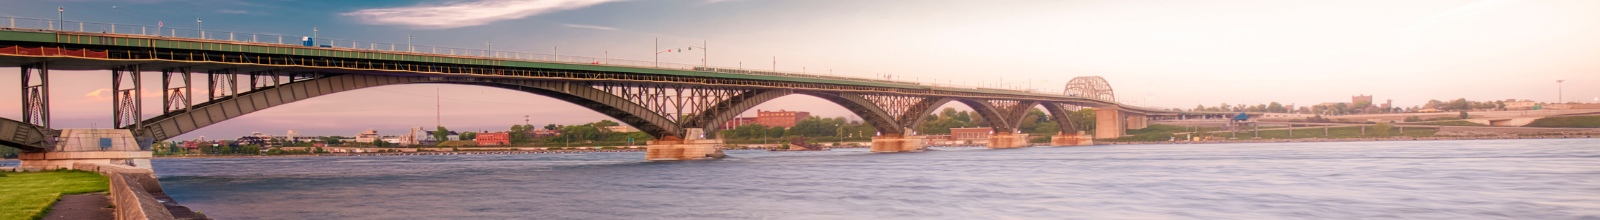 A large bridge crosses over a large river